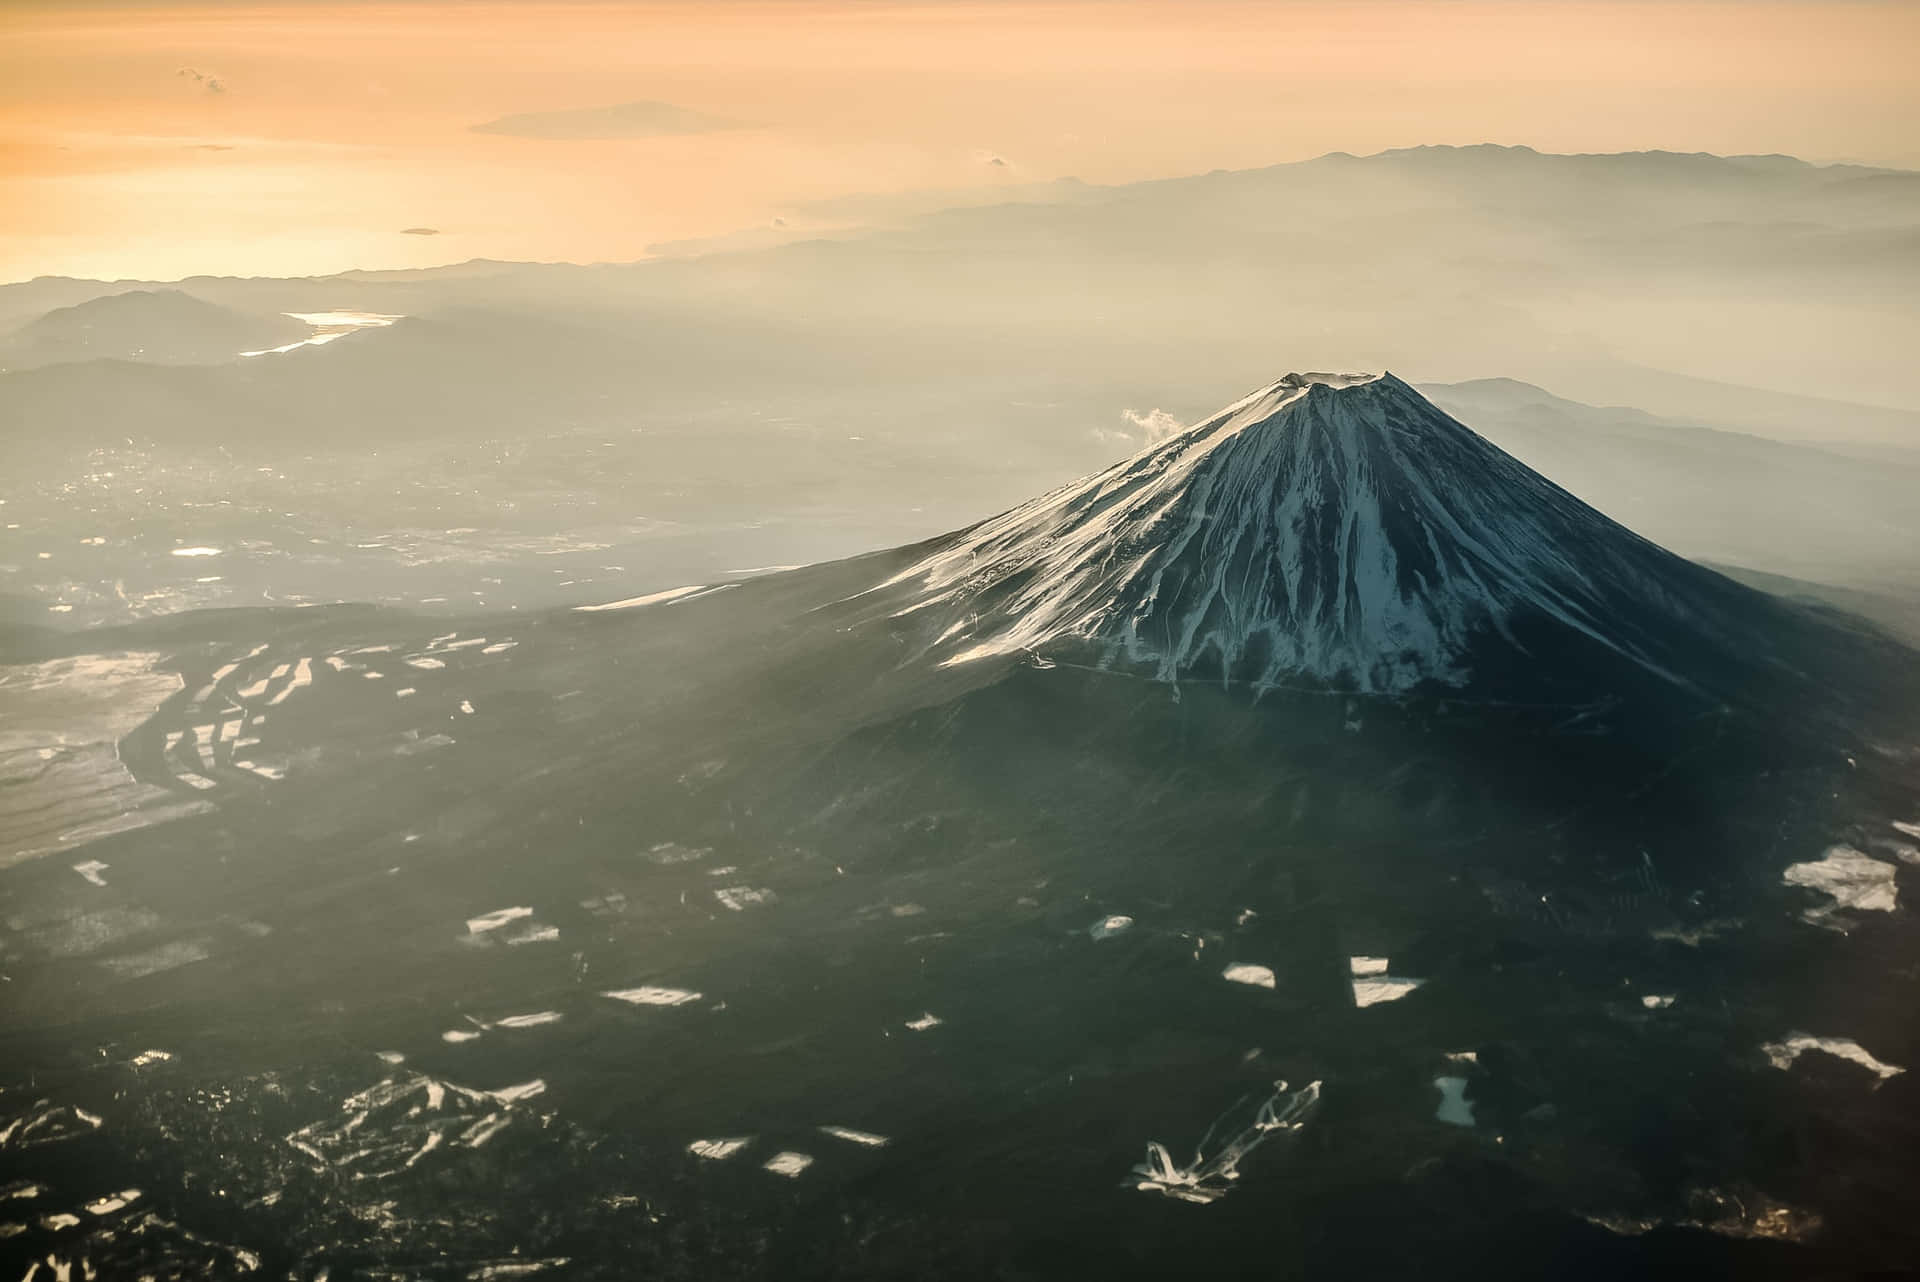 "Breathtaking views of majestic Mt. Fuji, Japan"